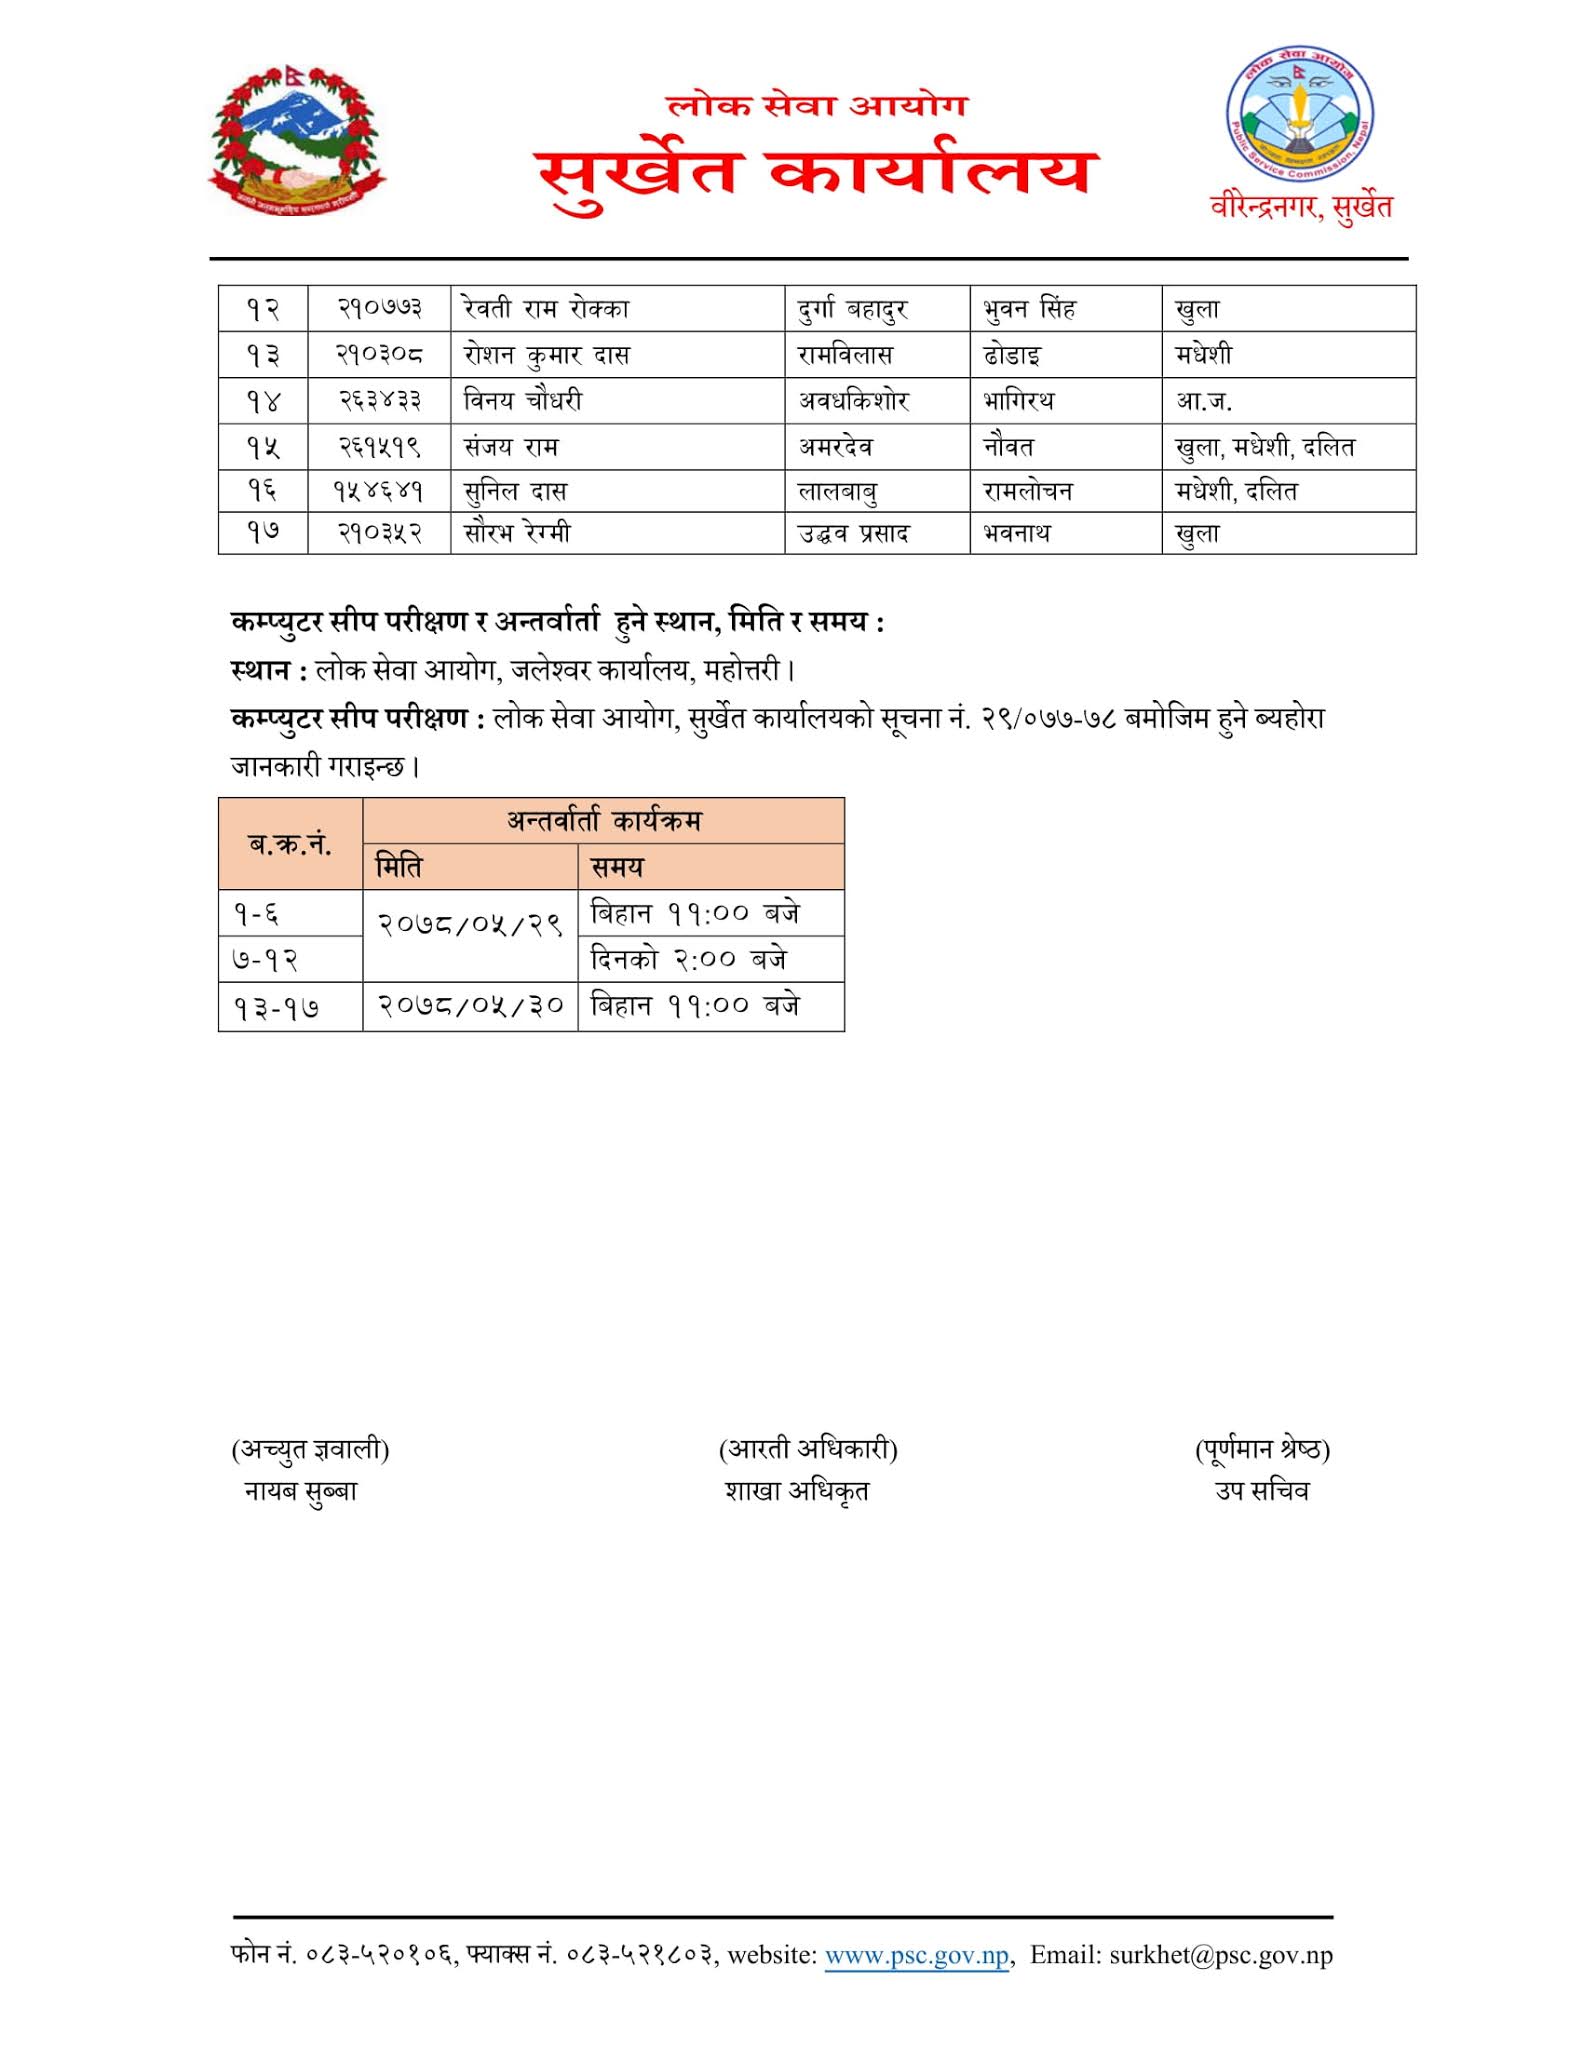 Jaleshwor Lok Sewa Aayog Written Exam Result & Exam Schedule of NASU Revenue published by Surkhet Lok Sewa Aayog